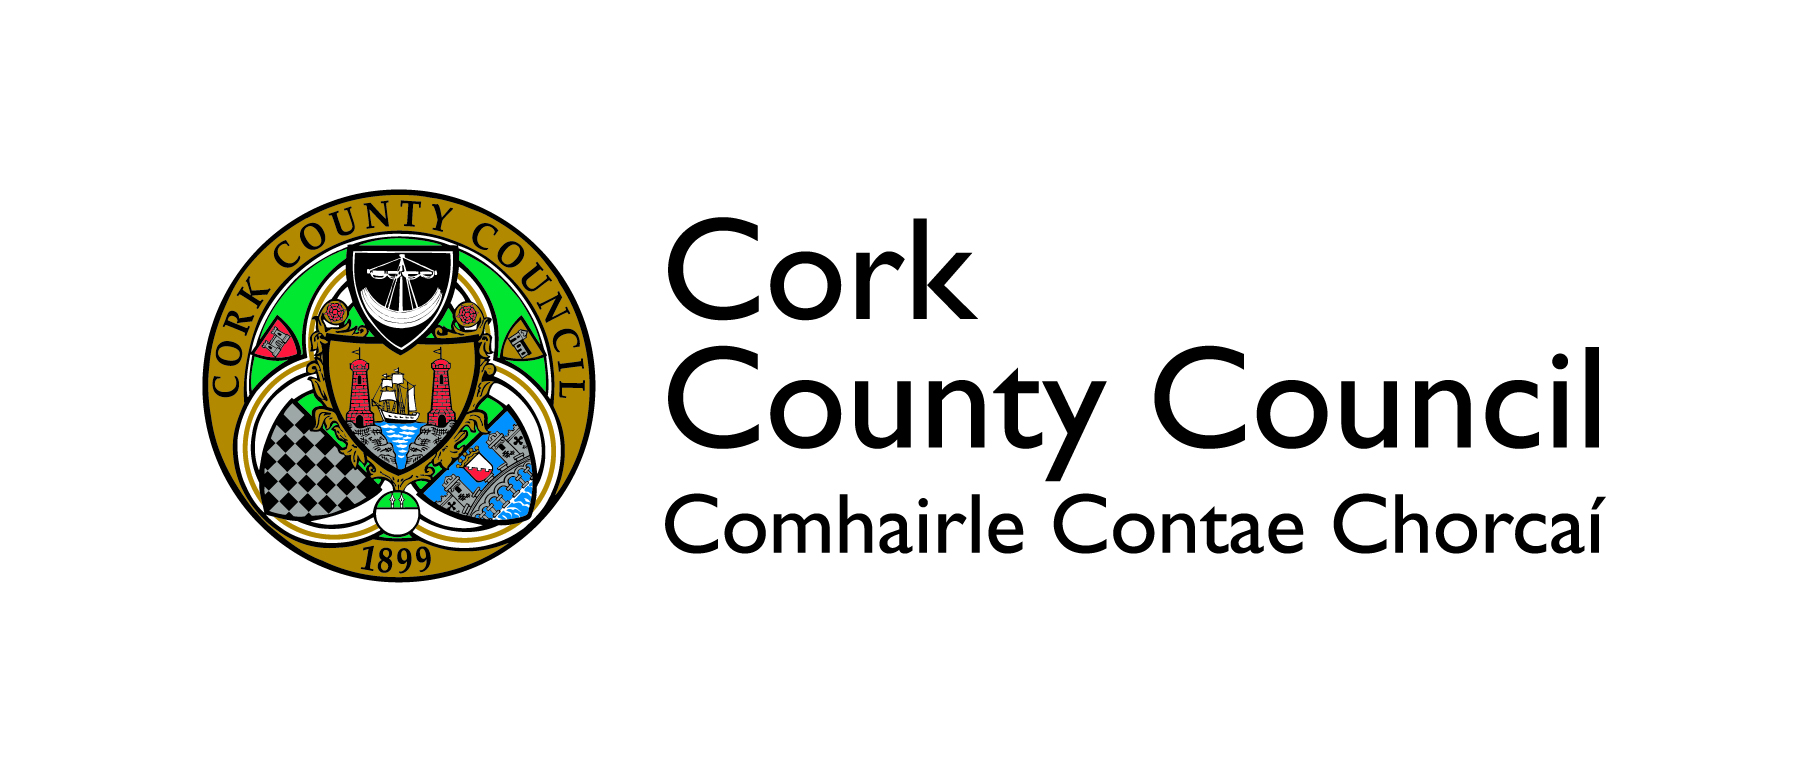 County Cork Commemorations Grant Scheme 2020 Recipients Announced